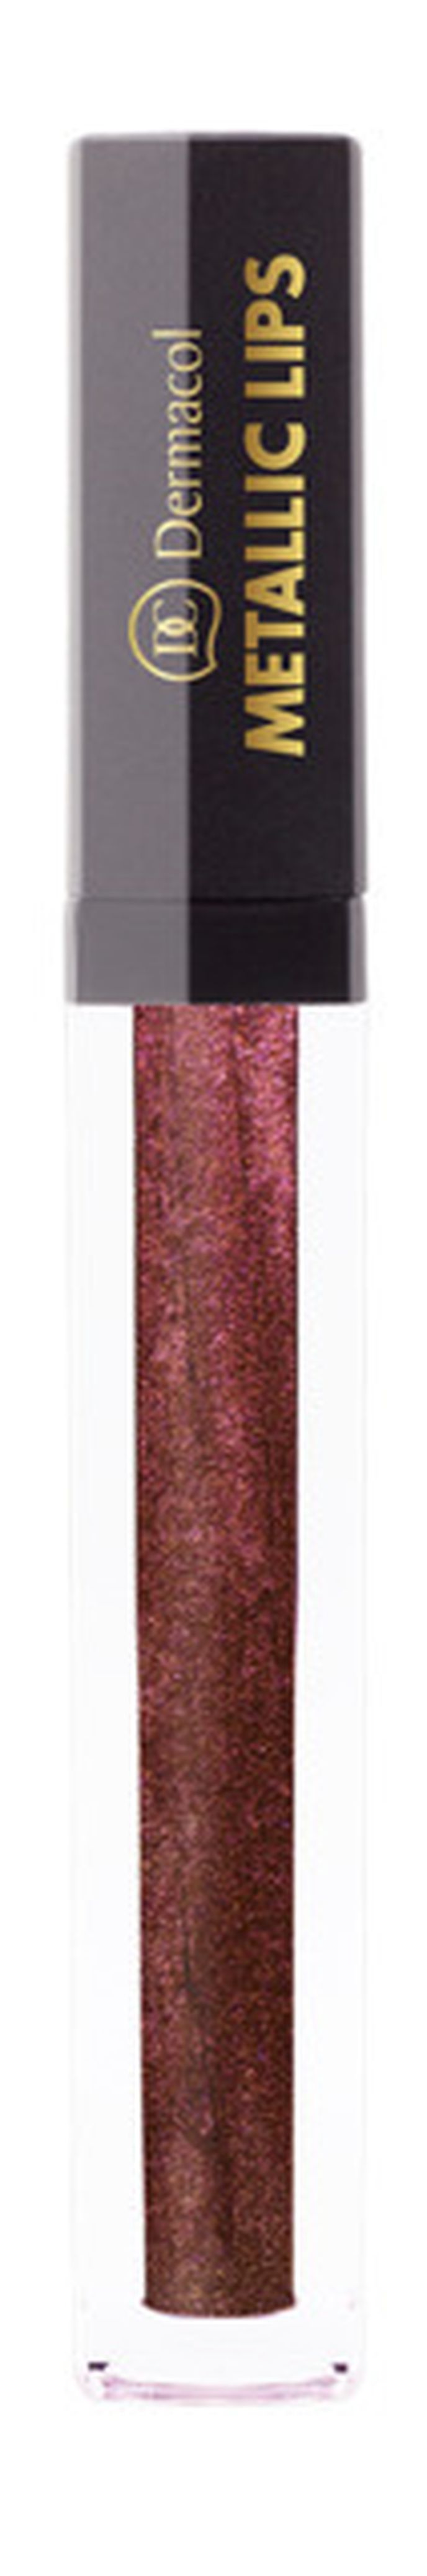 Tekutá metalická rtěnka Metallic Lips, Dermacol, odstín 05, 199 Kč/3,5 ml